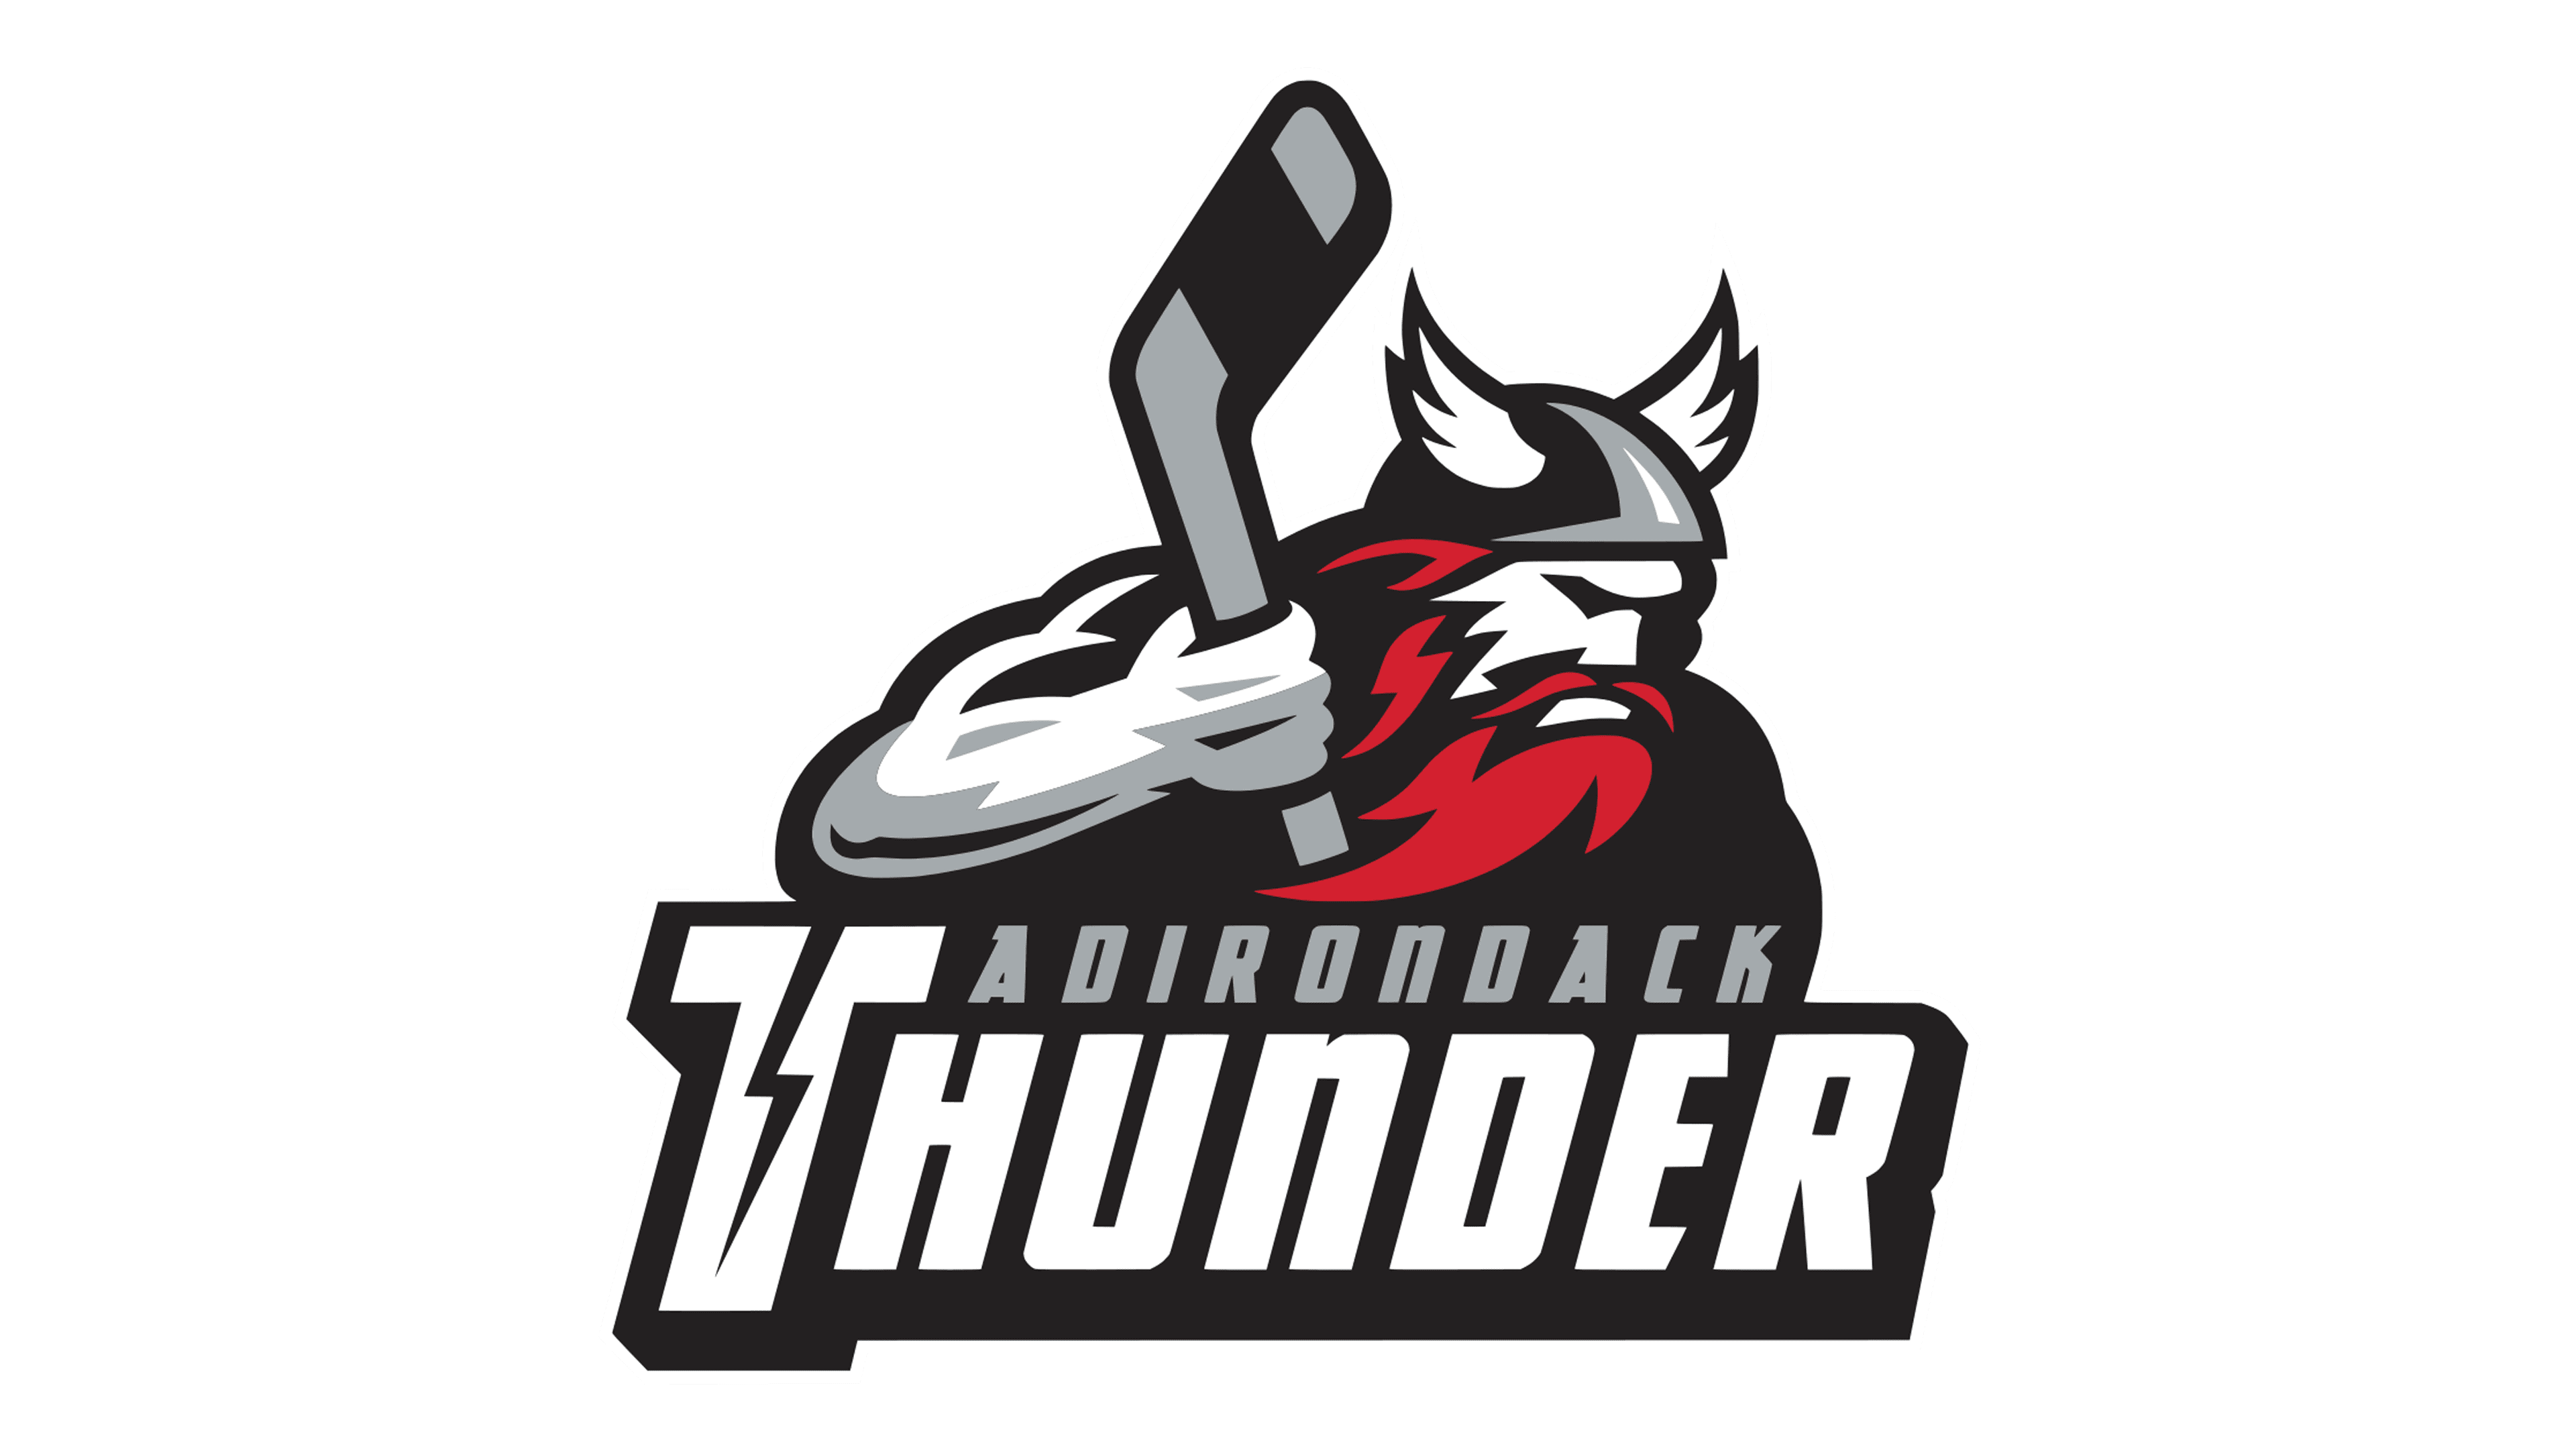 Adirondack Thunder Logo and symbol, meaning, history, PNG, brand